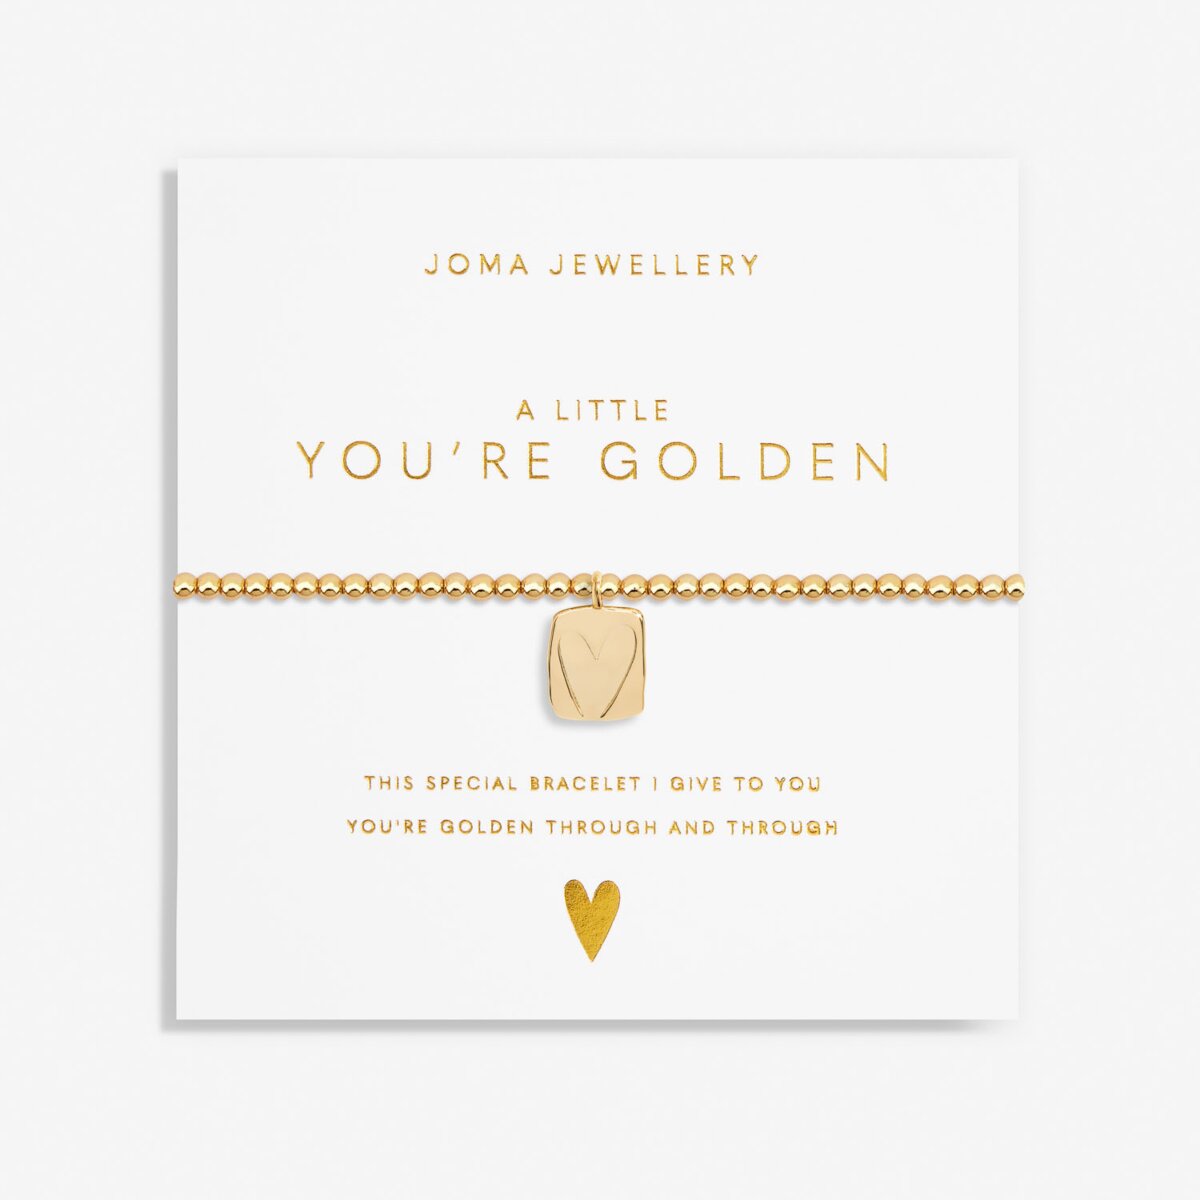 JOMA JEWELLERY | A LITTLE GOLD | YOU'RE GOLDEN BRACELET